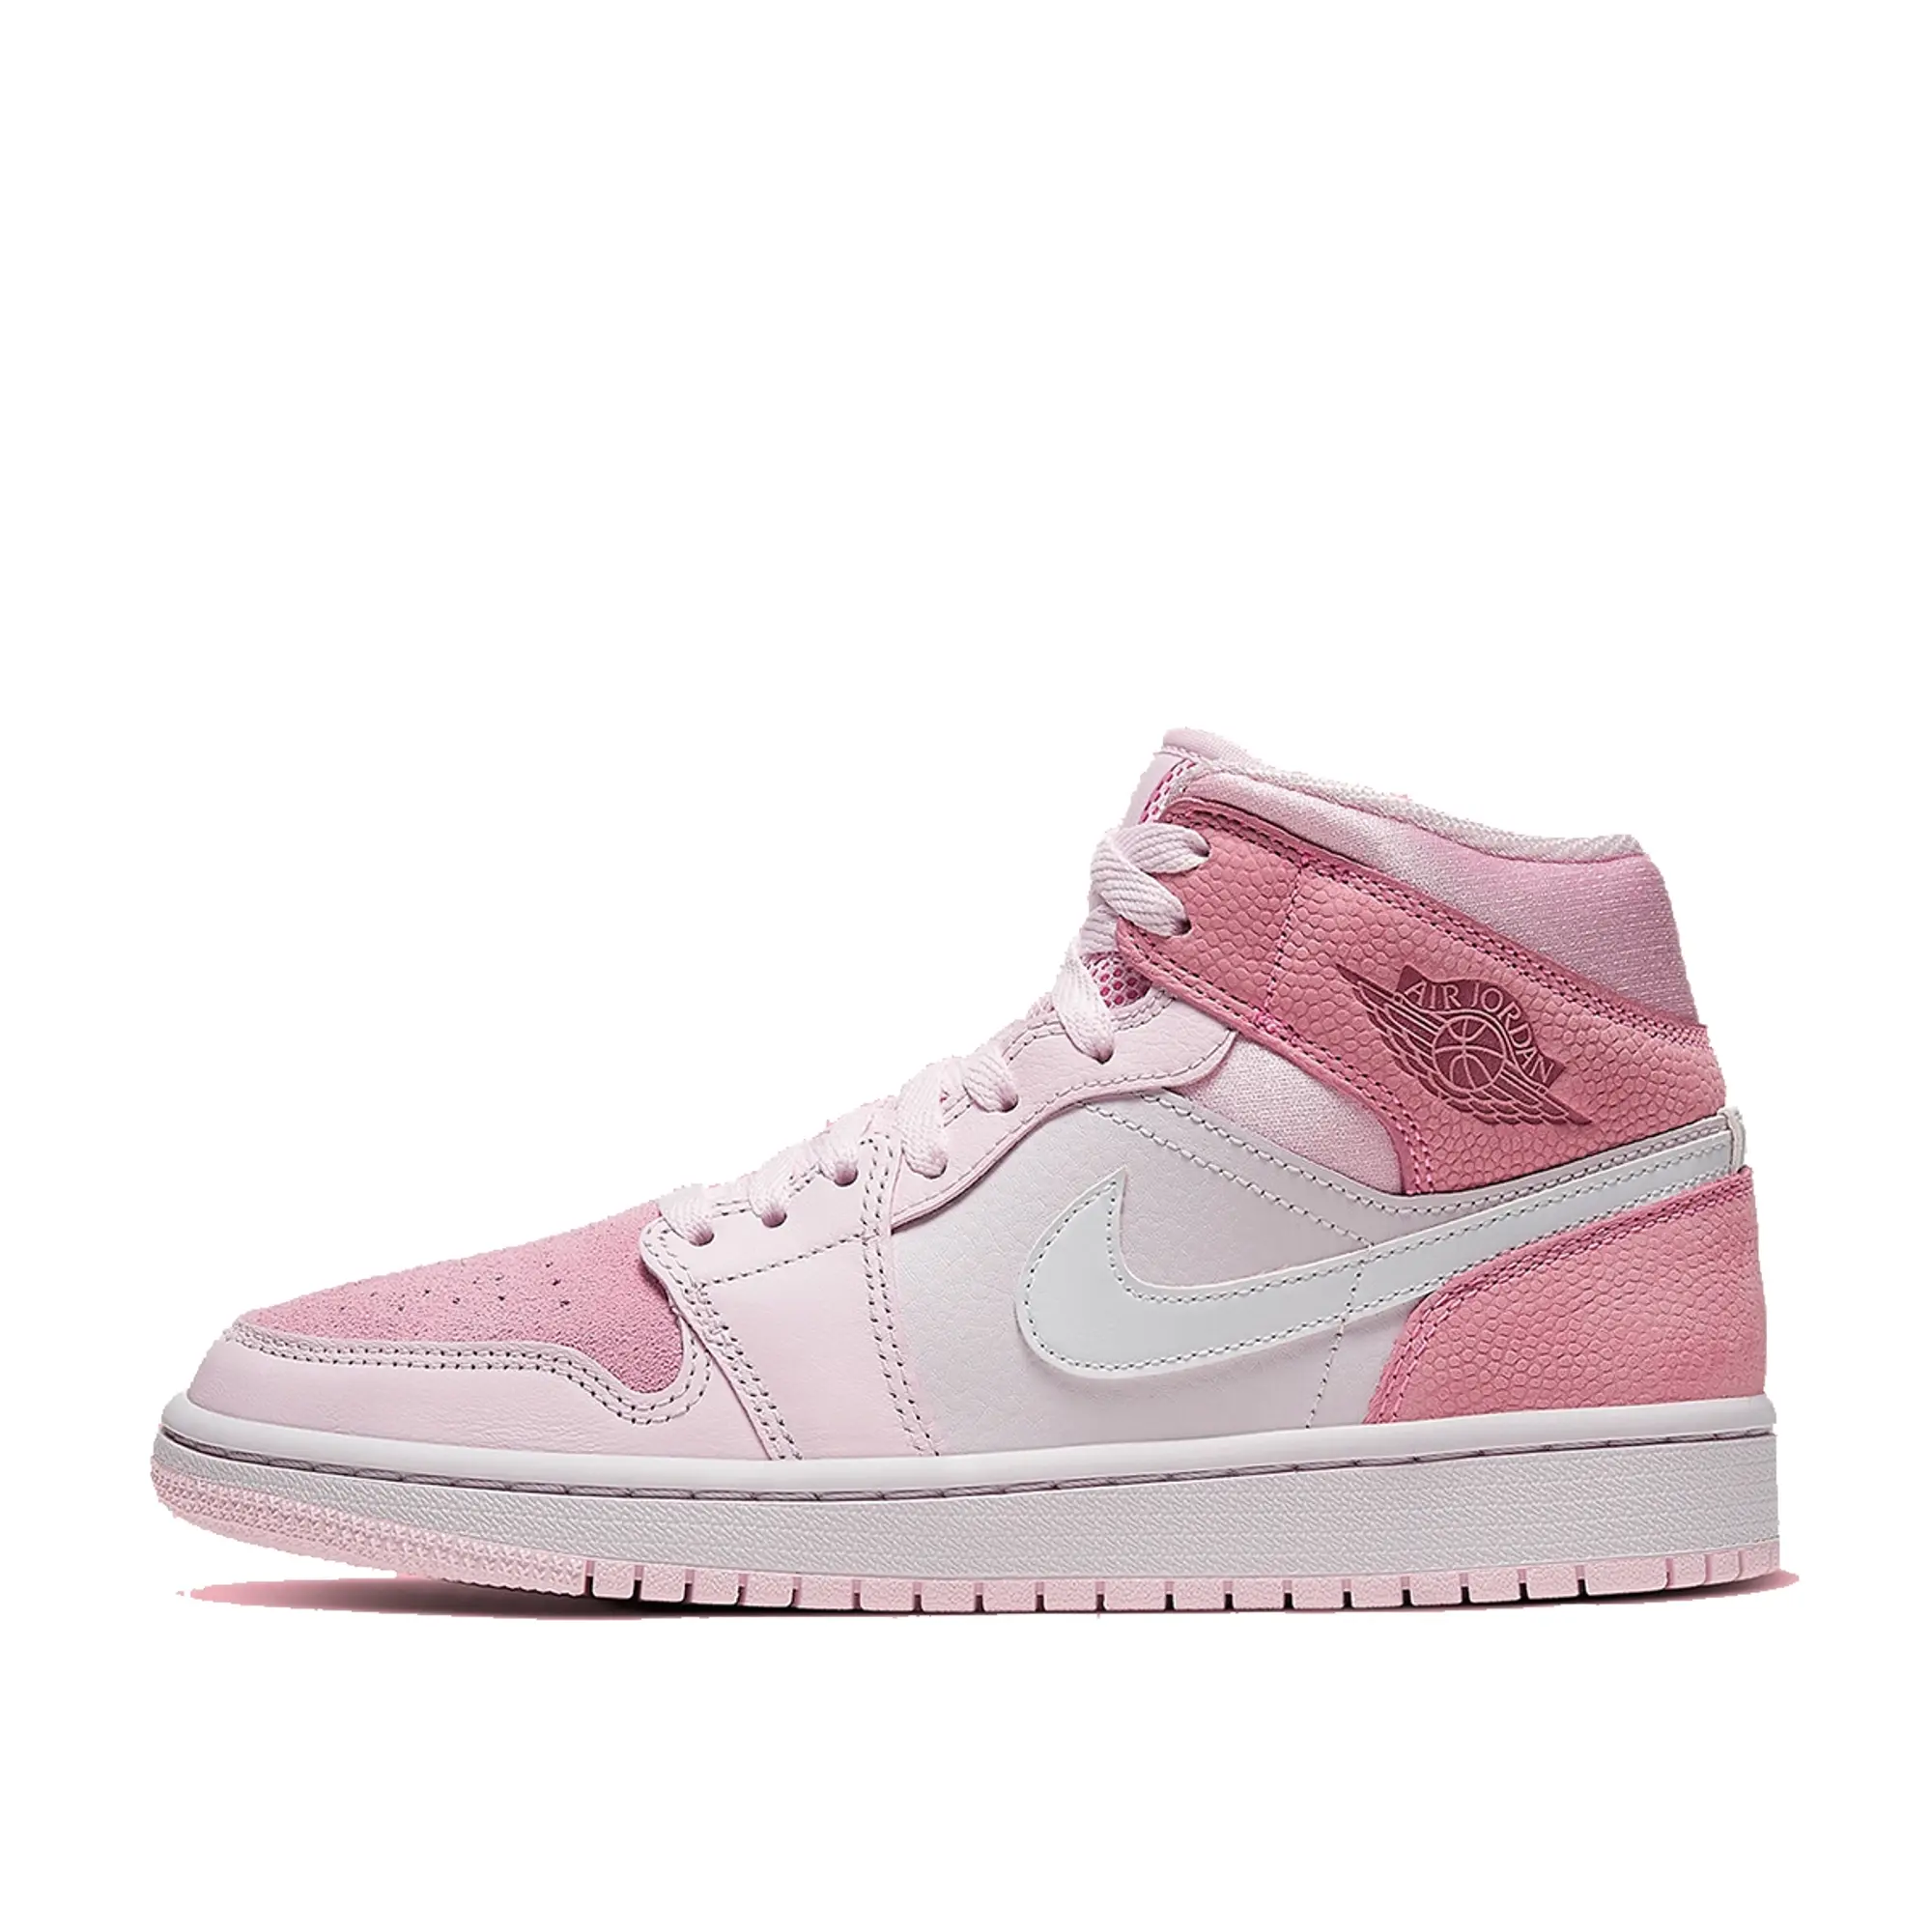 Nike Air Jordan 1 Mid WMNS Digital Pink